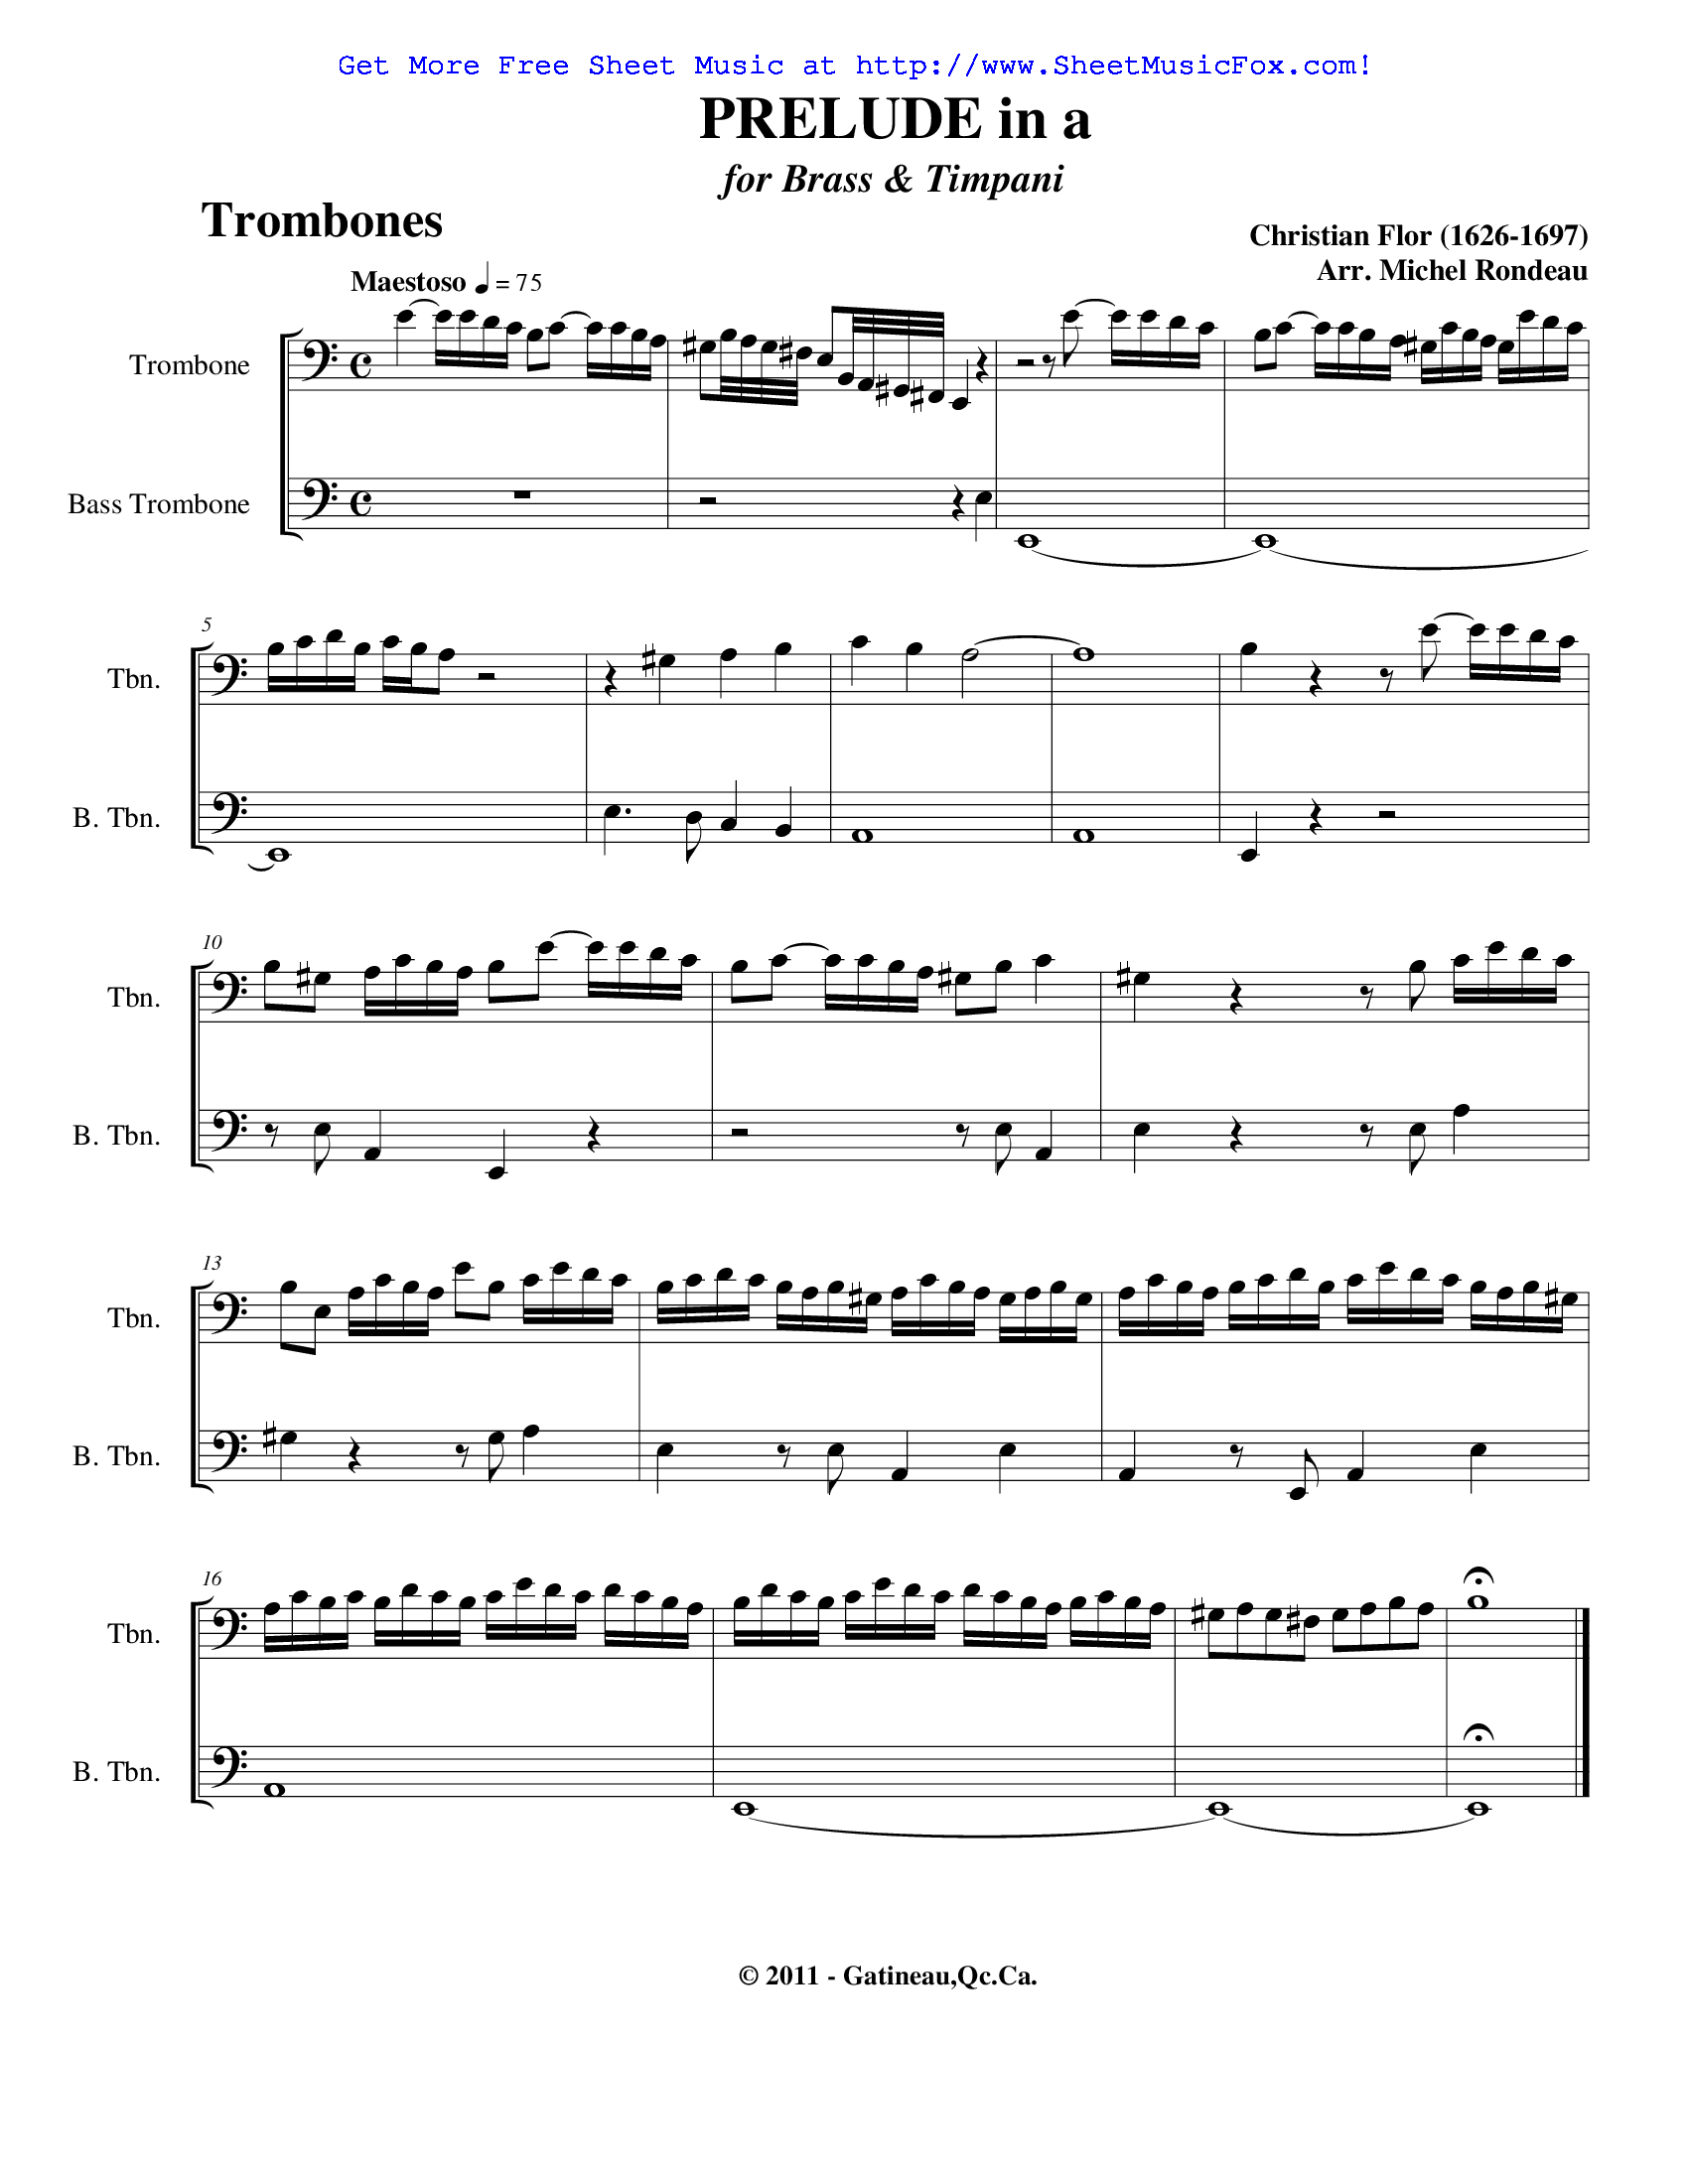 Free sheet music for Prelude in C major (Flor, Christian